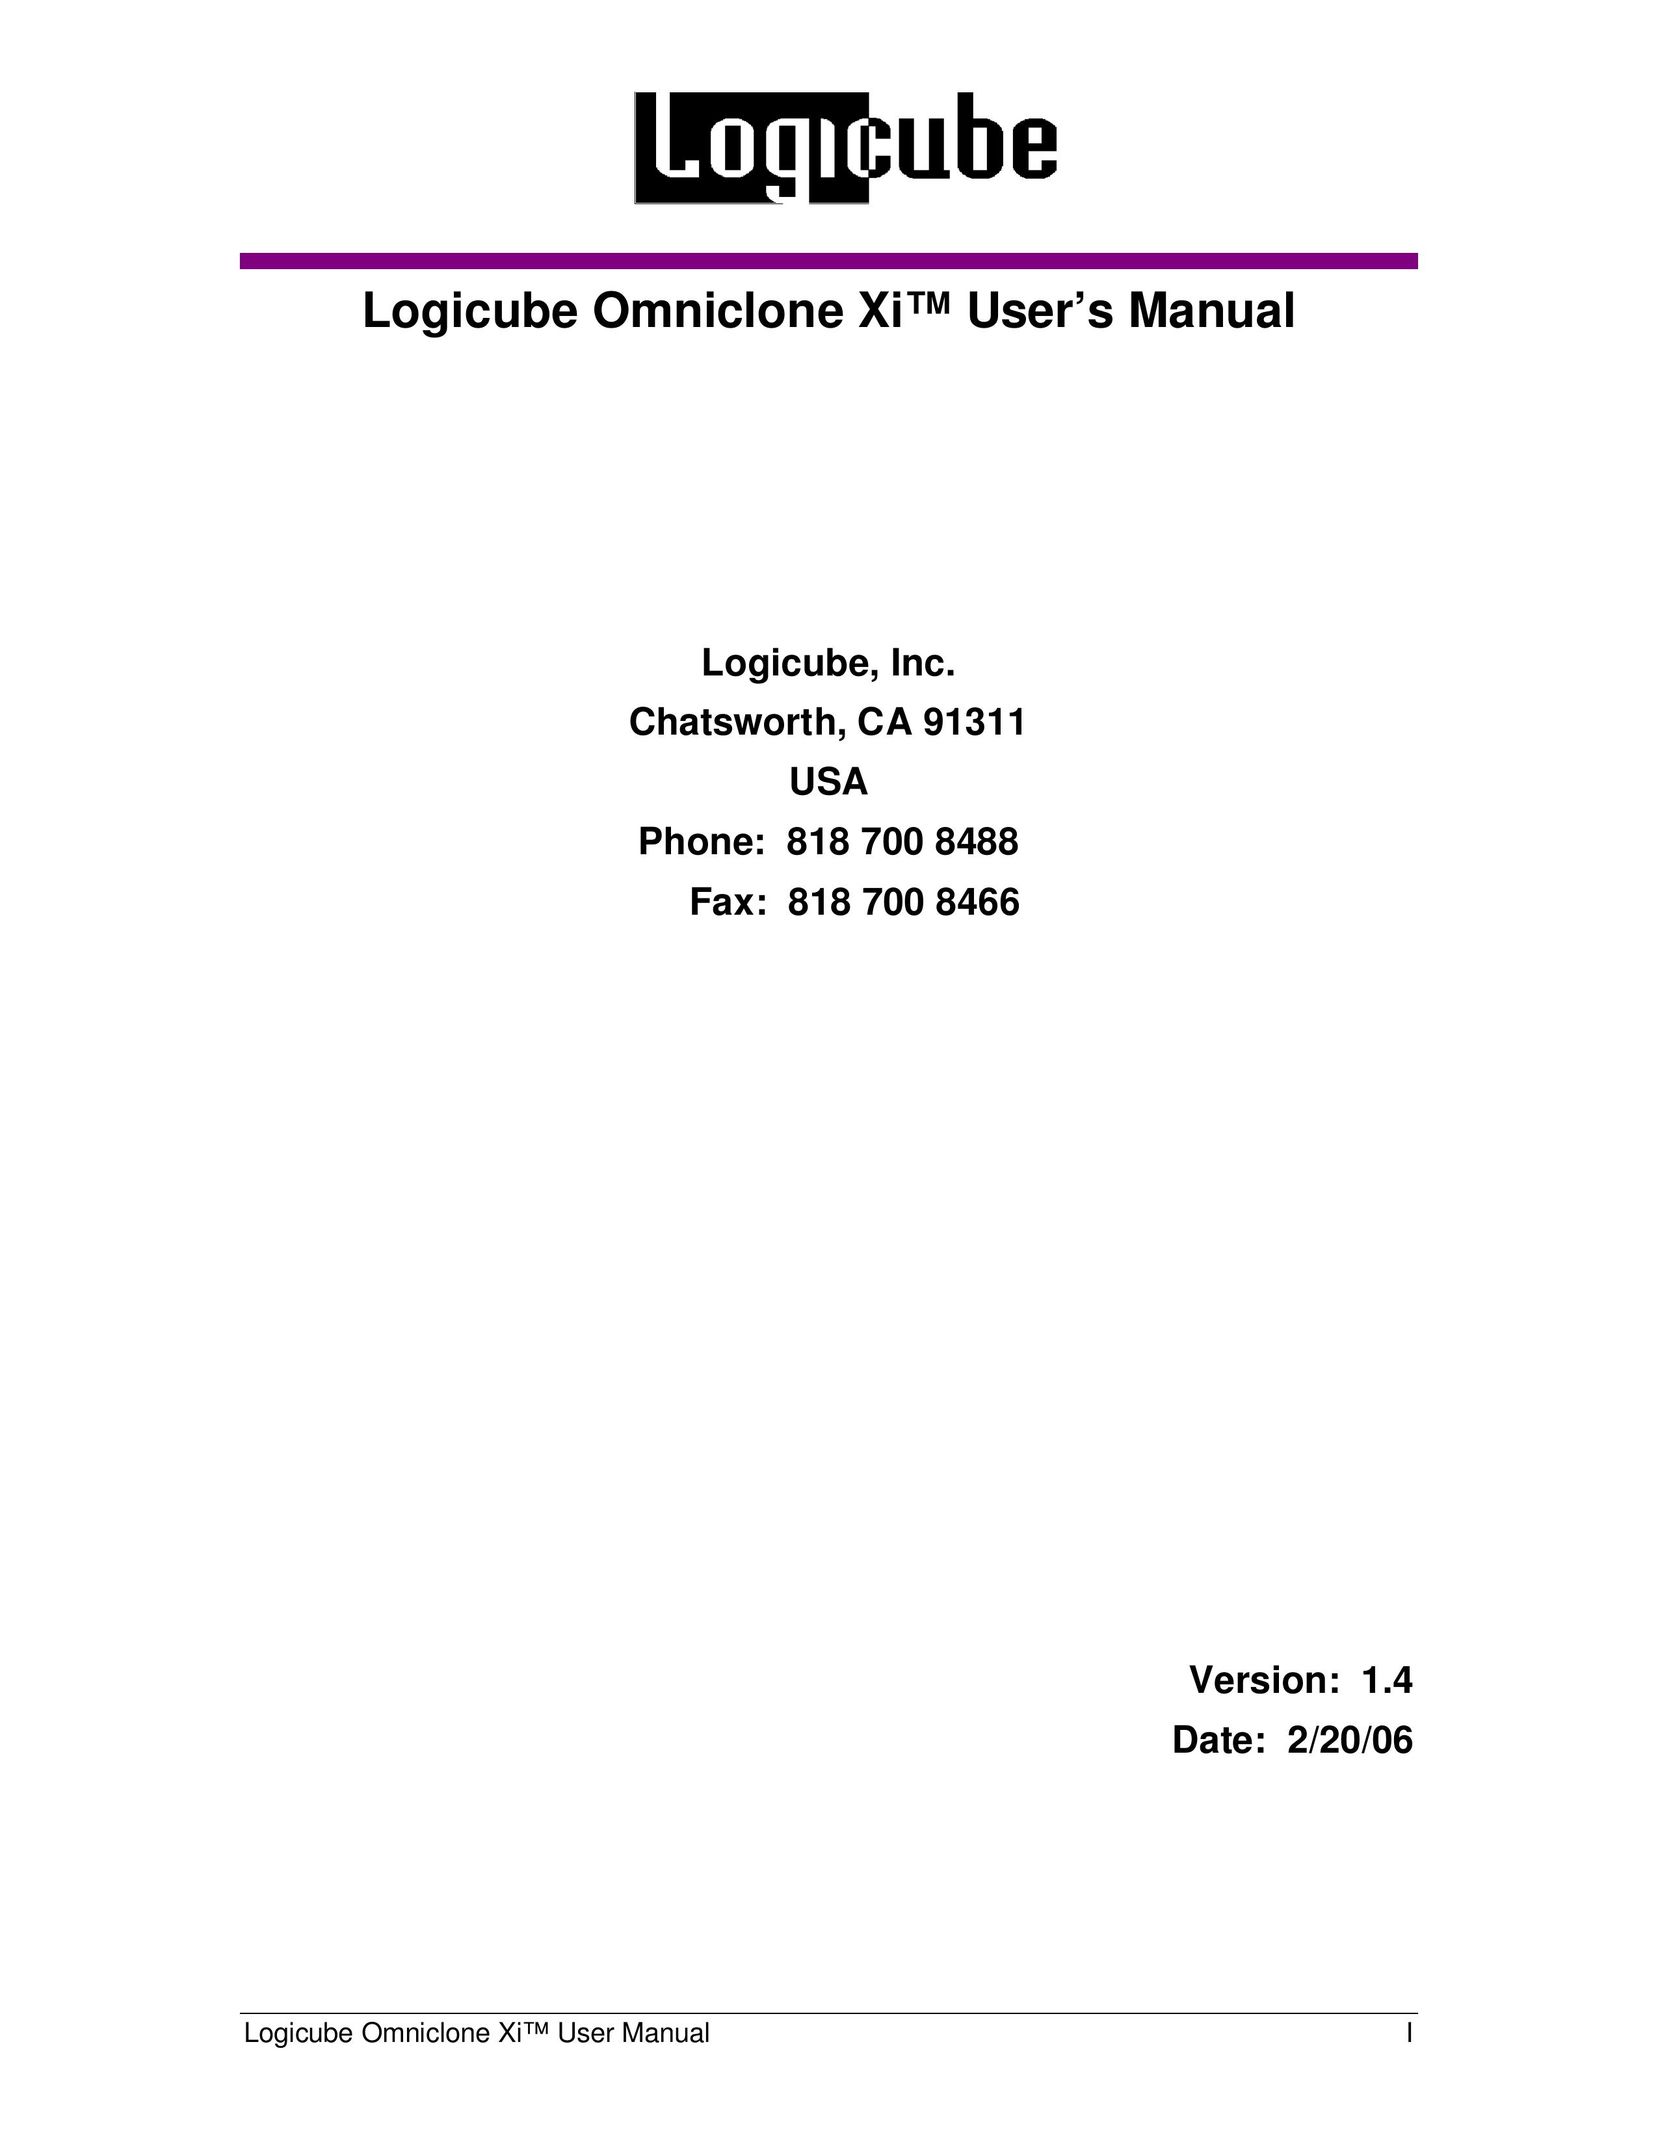 Logicube Omniclone Xi Network Card User Manual